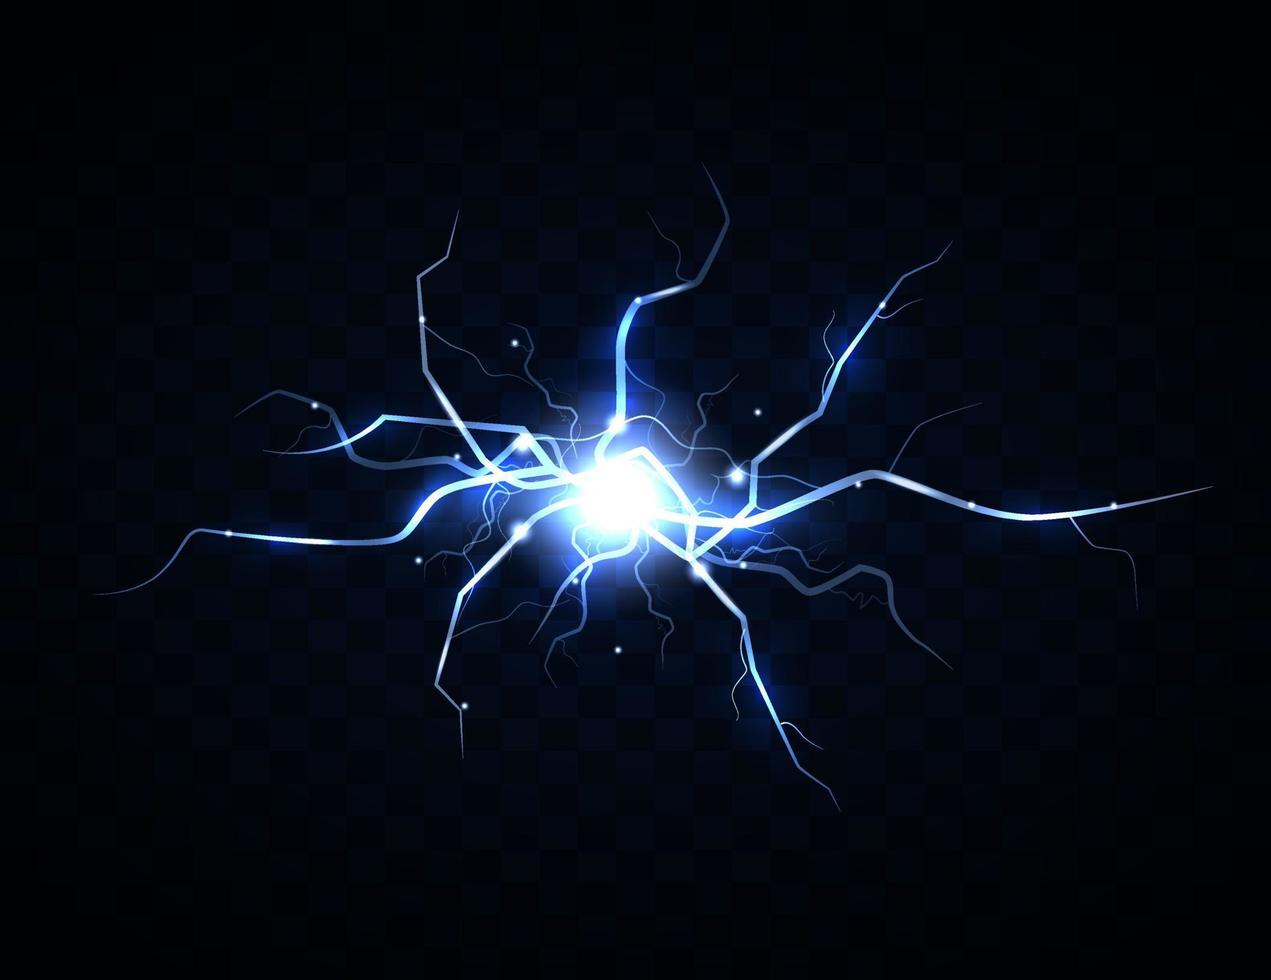 blixt- blixt åska gnistor. boll blixt- eller elektrisk brista storm eller blixt- i de himmel. naturlig fenomen av mänsklig nerver eller nervös cell systemet. vektor illustration